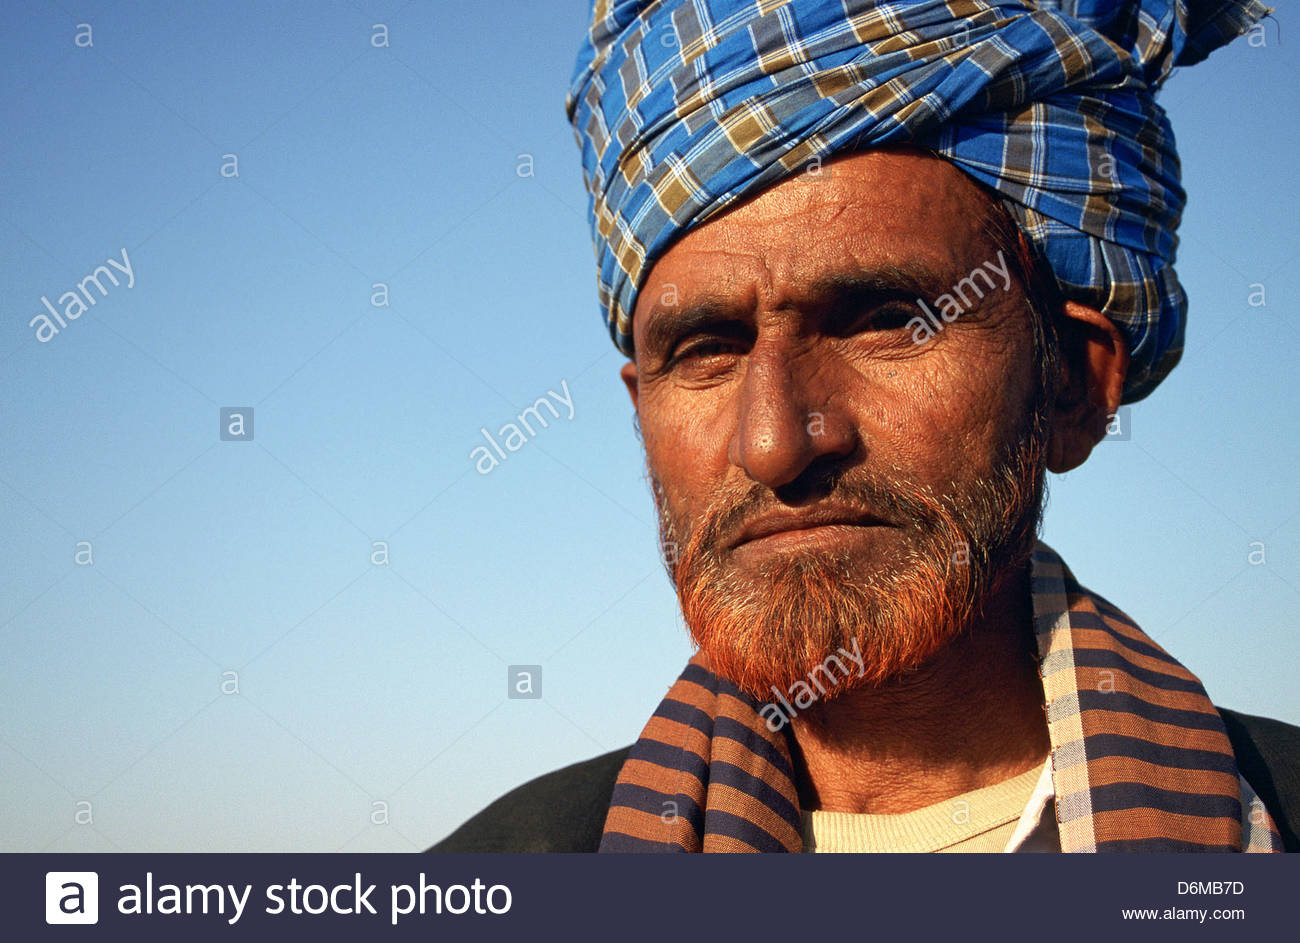 muslim-farmer-belonging-to-the-sindhi-community-india-D6MB7D.jpg